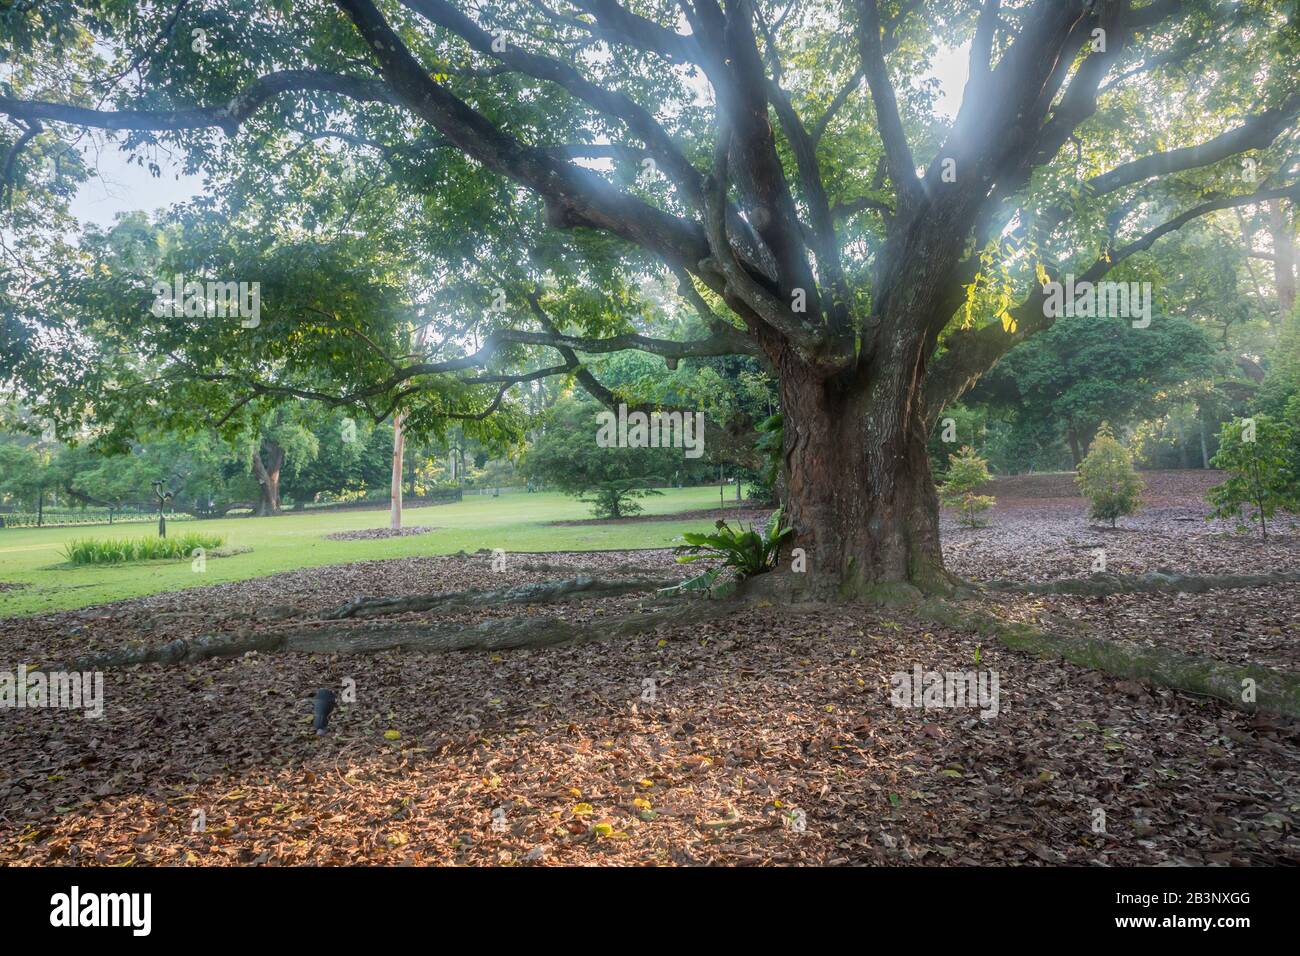 Heritage trees, Singapore Botanic Gardens Stock Photo